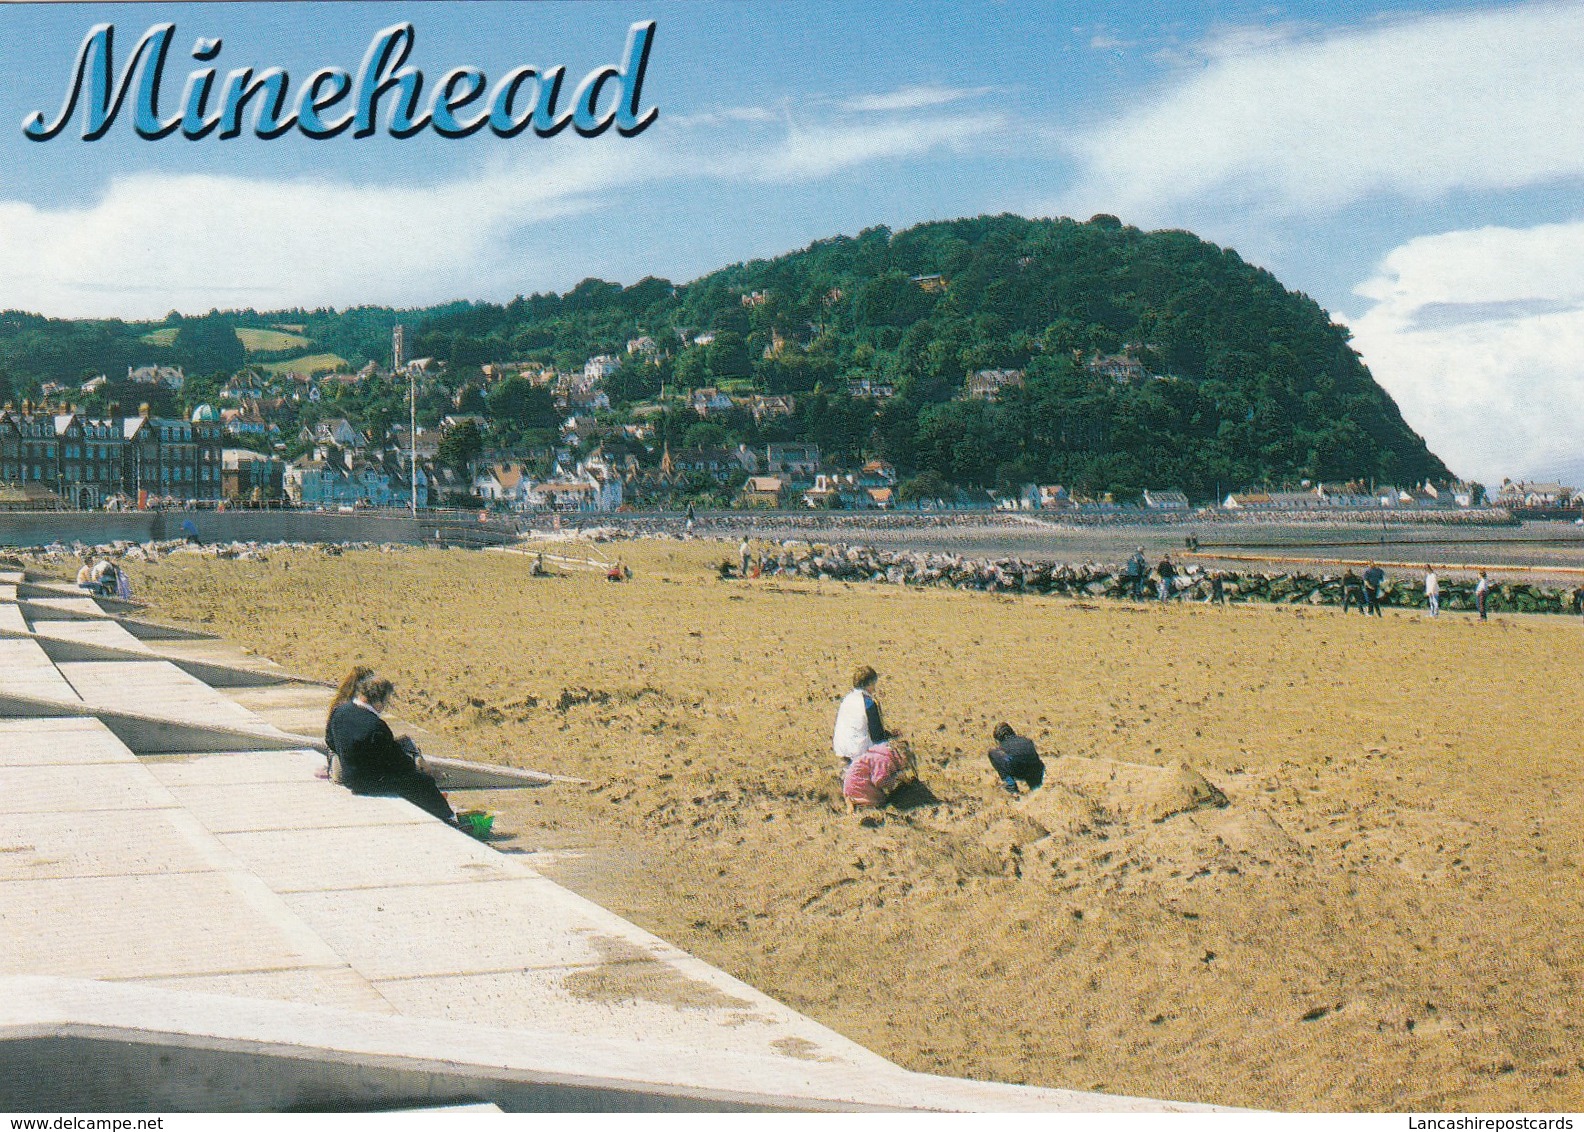 Postcard  Minehead Somerset My Ref  B23449 - Minehead